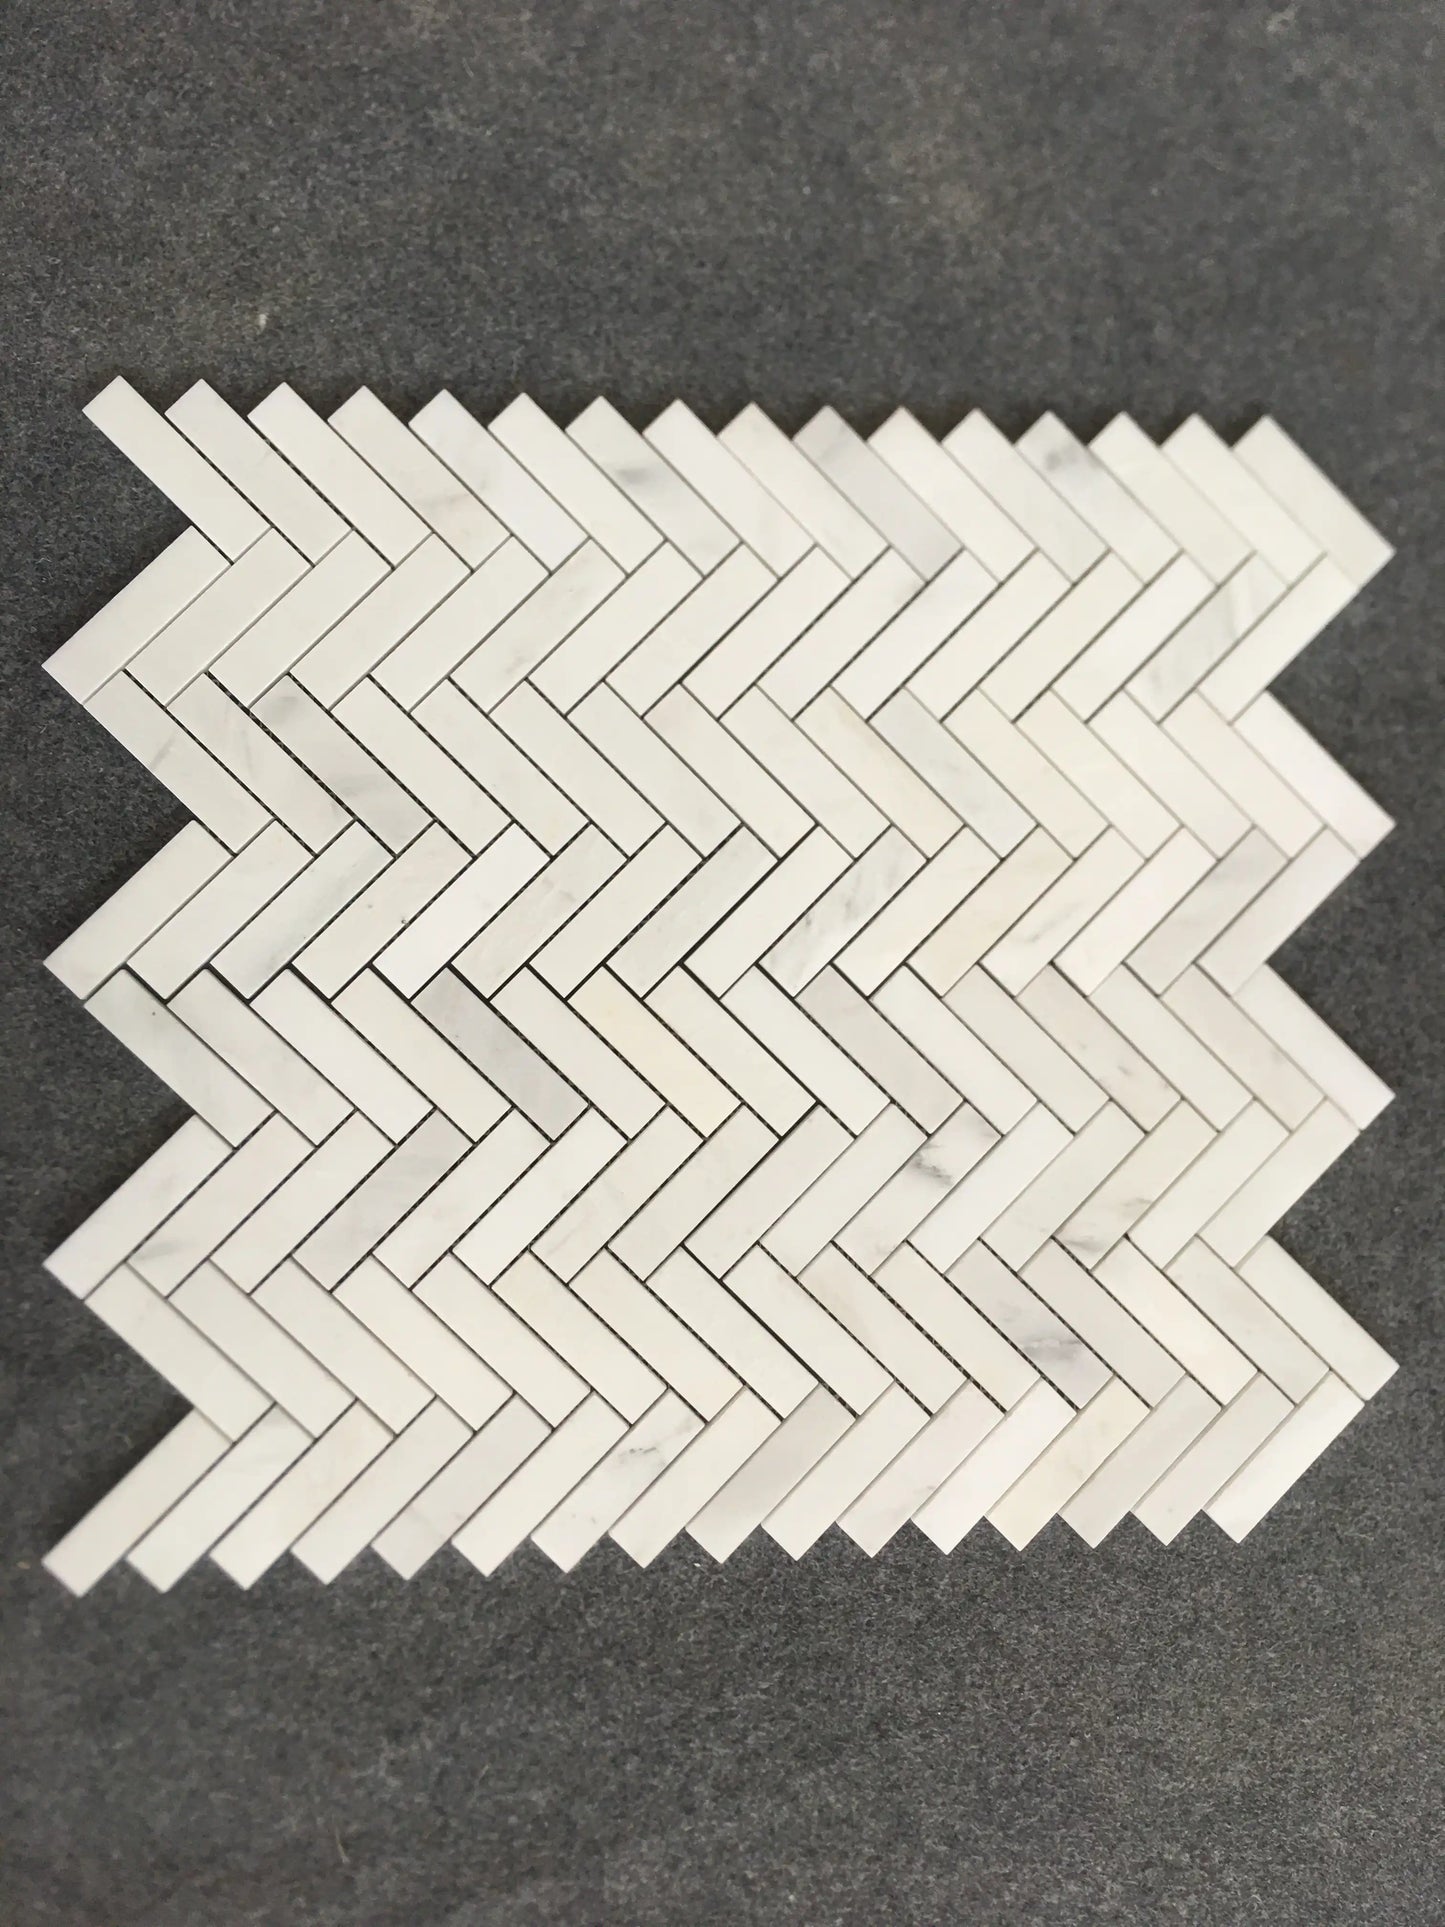 Oriental White Herringbone Mosaic Tile 1x4"